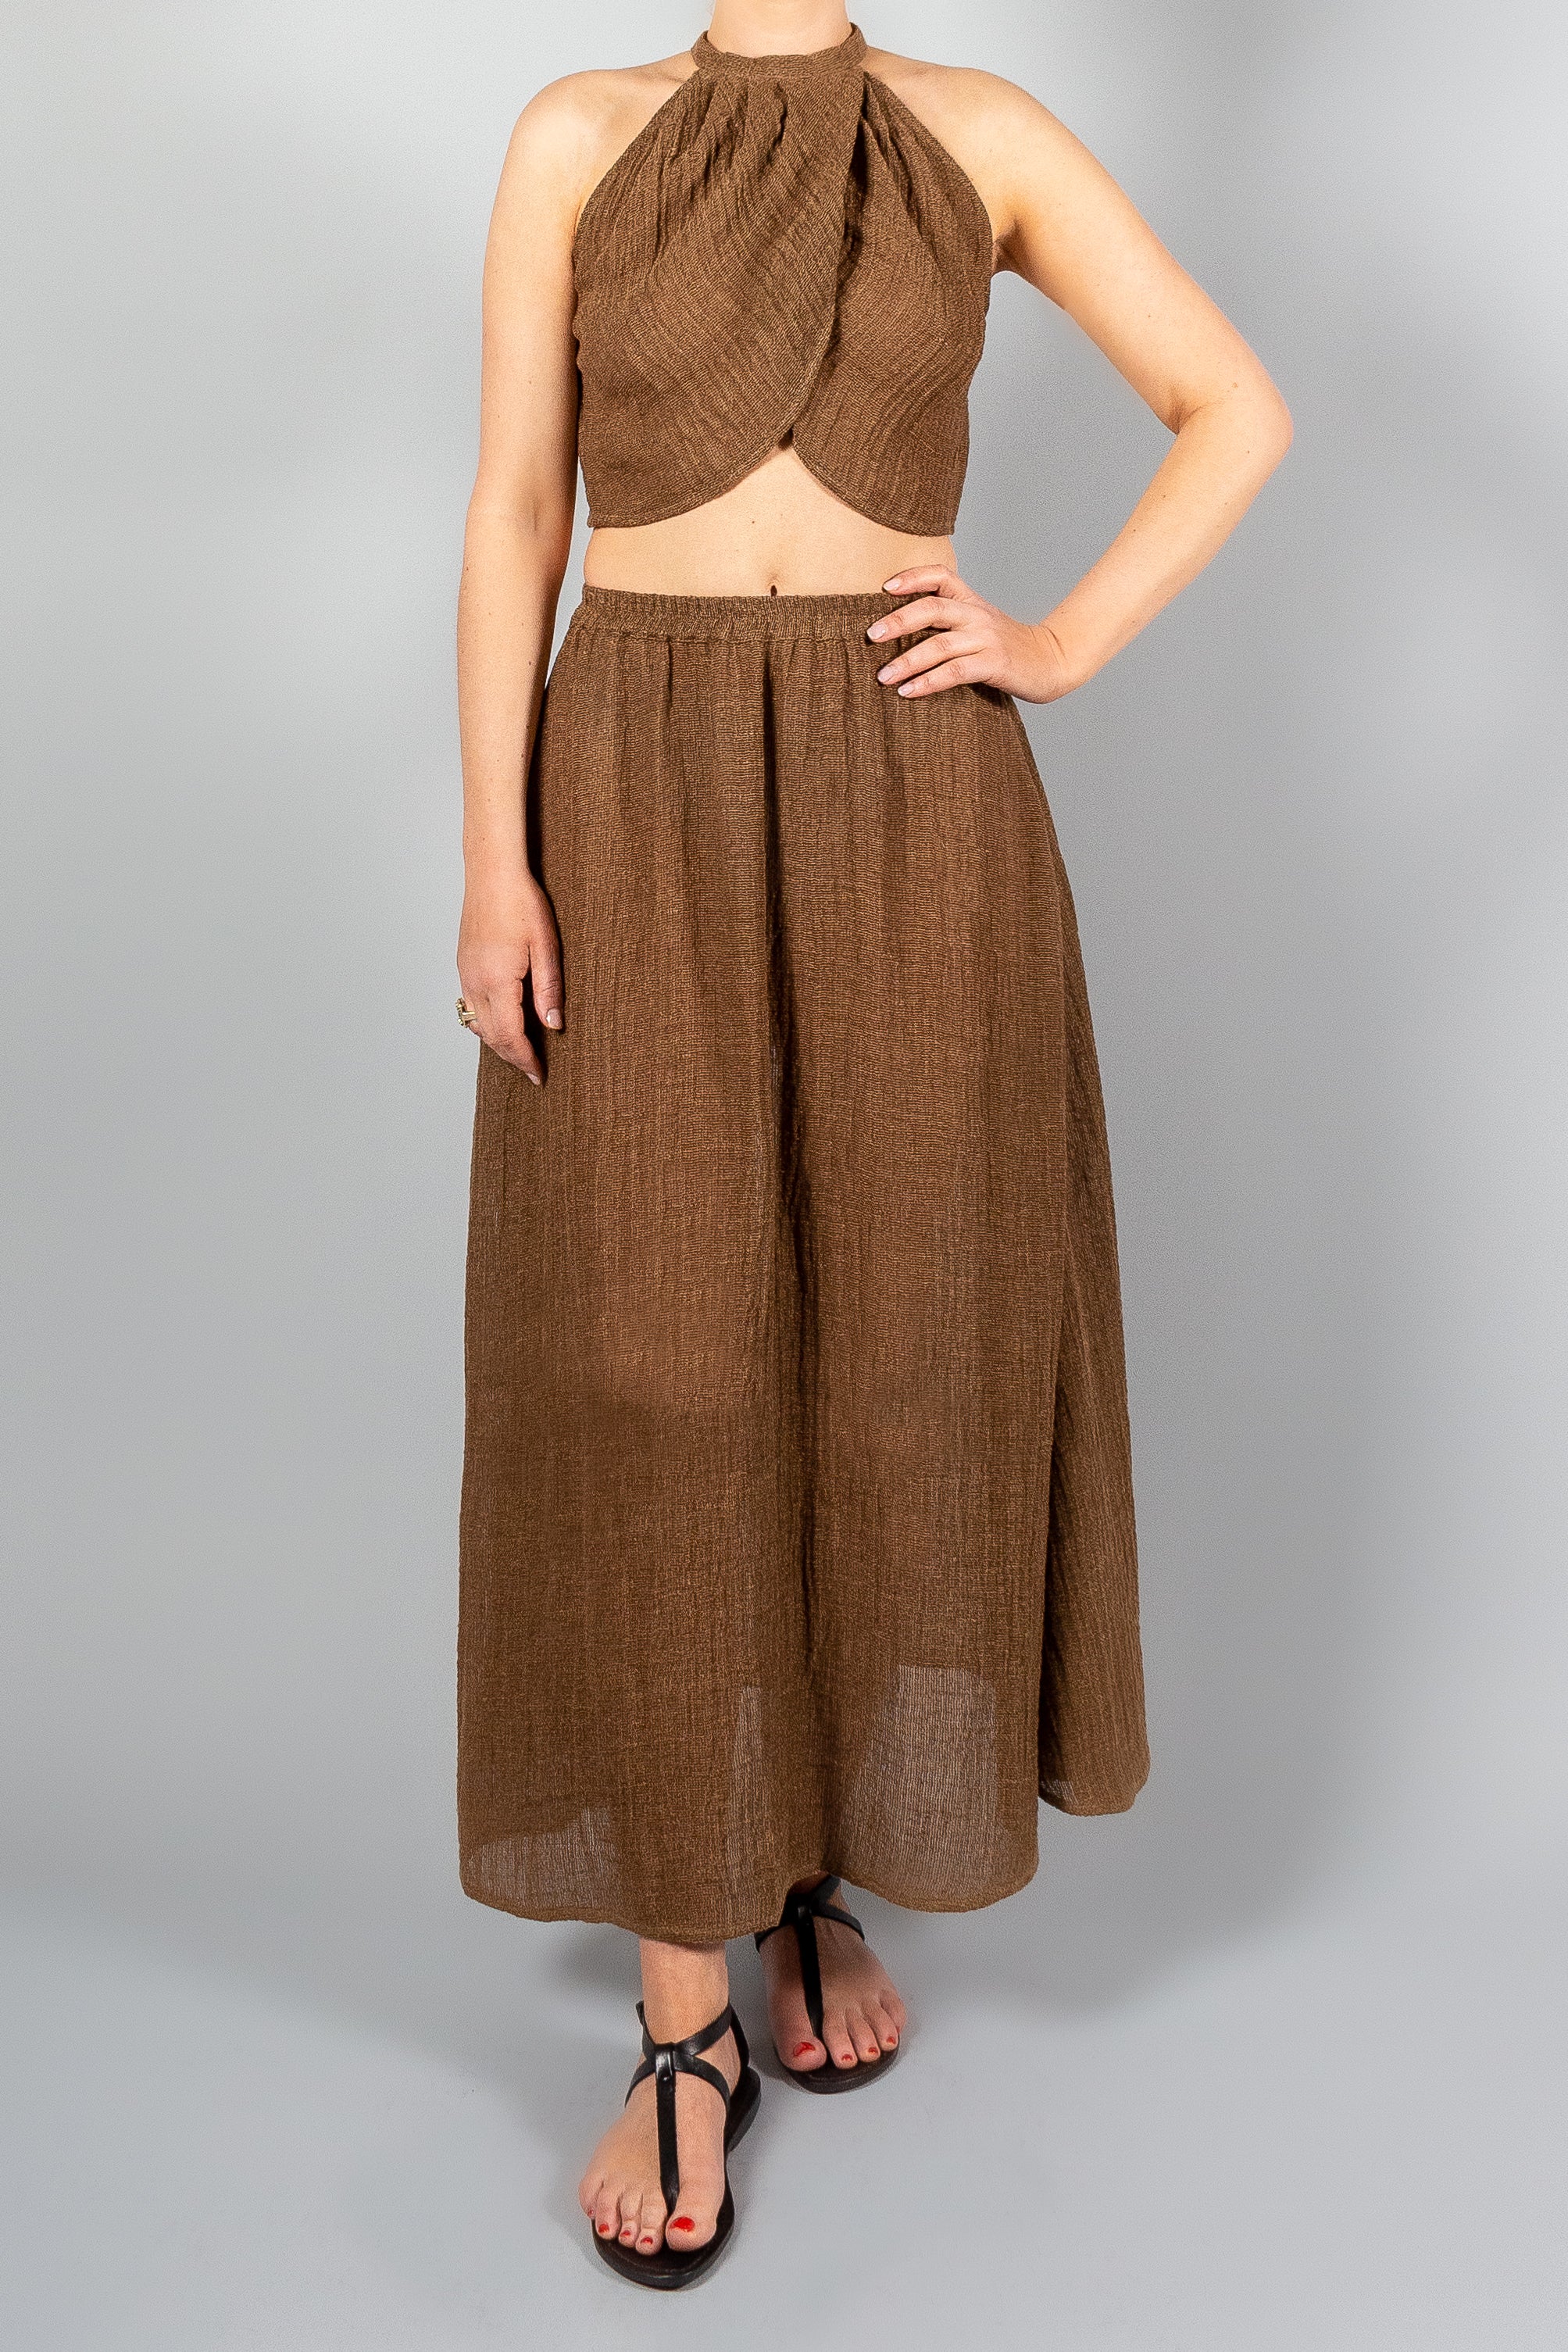 Le Kasha Linen Skirt-Skirts-Misch-Boutique-Vancouver-Canada-misch.ca